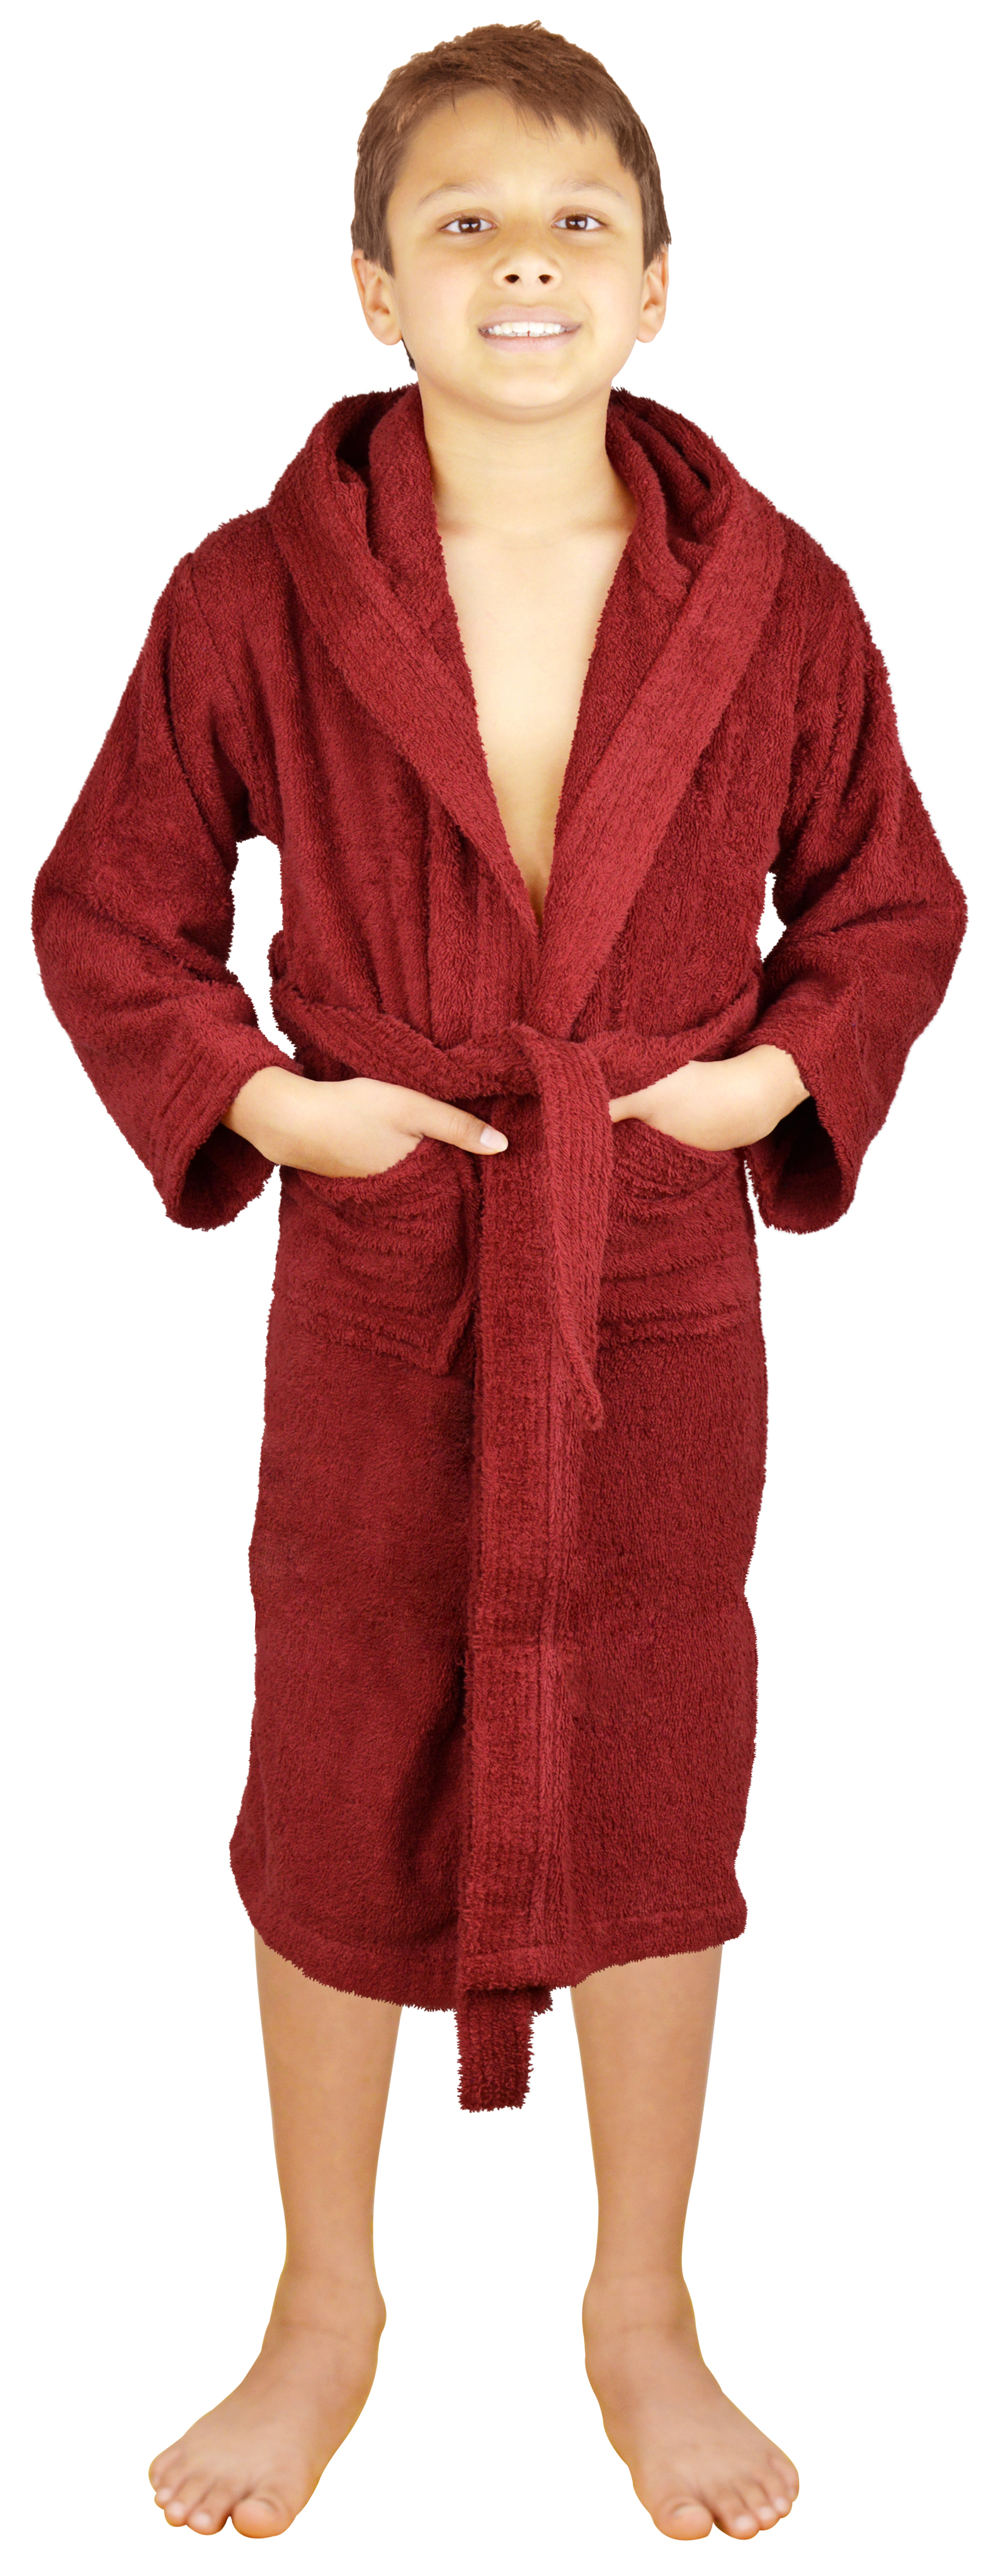 Kids Bathrobe Towelling Robes Bath Robe Childrens Clothes Super Soft 100/% Cotton Oeko-TEX/® Hooded Bath Towel Dressing Gown for Boys